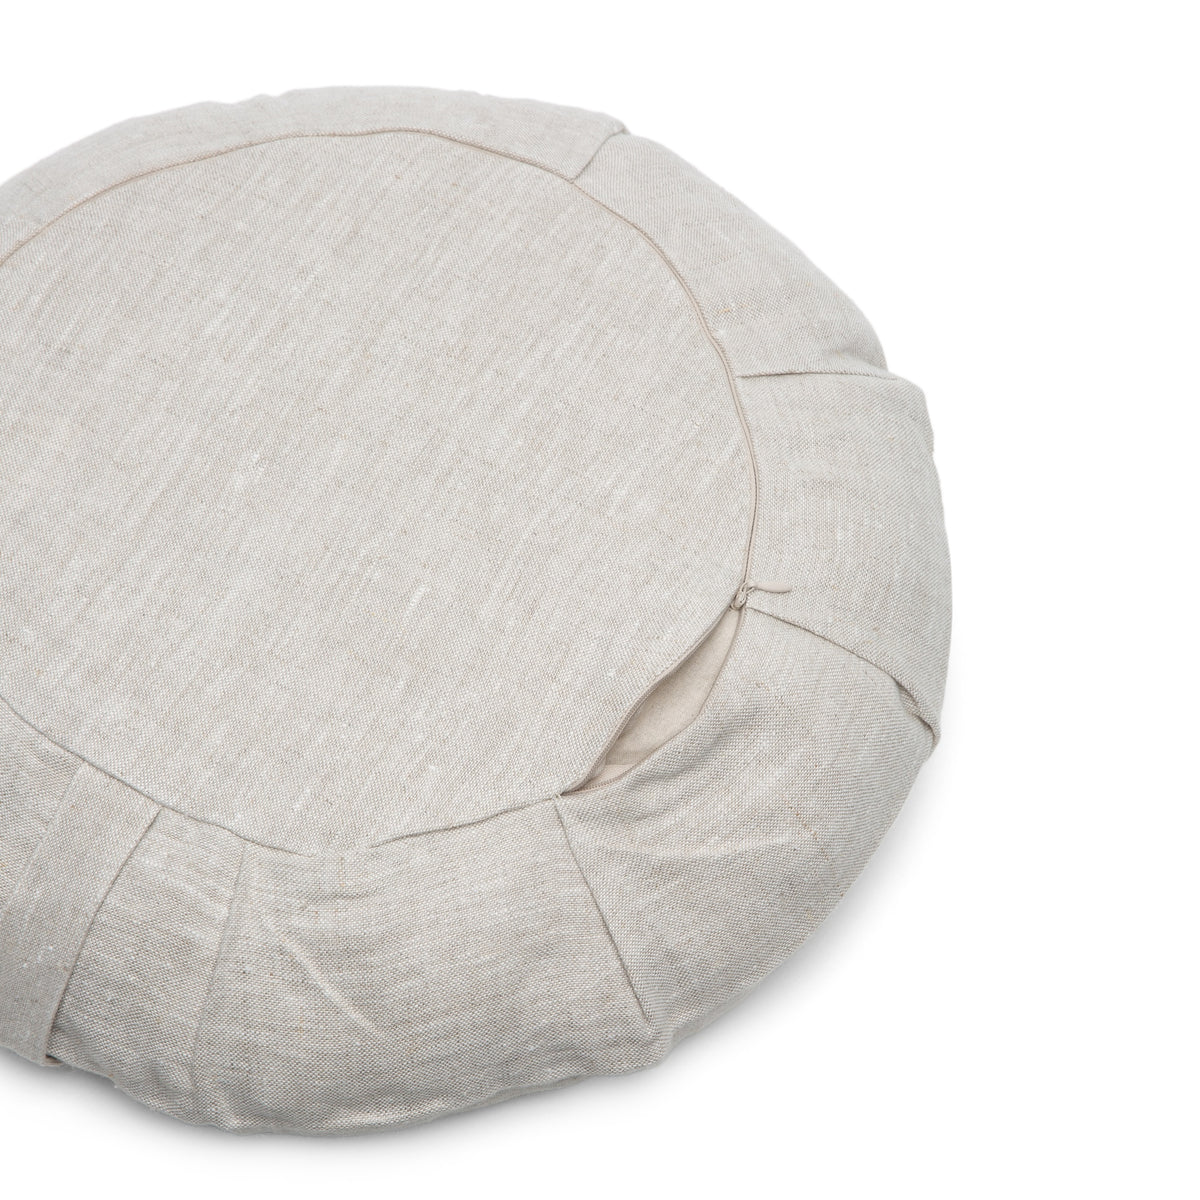 b, halfmoon Round Meditation Cushion Natural Linen bottom